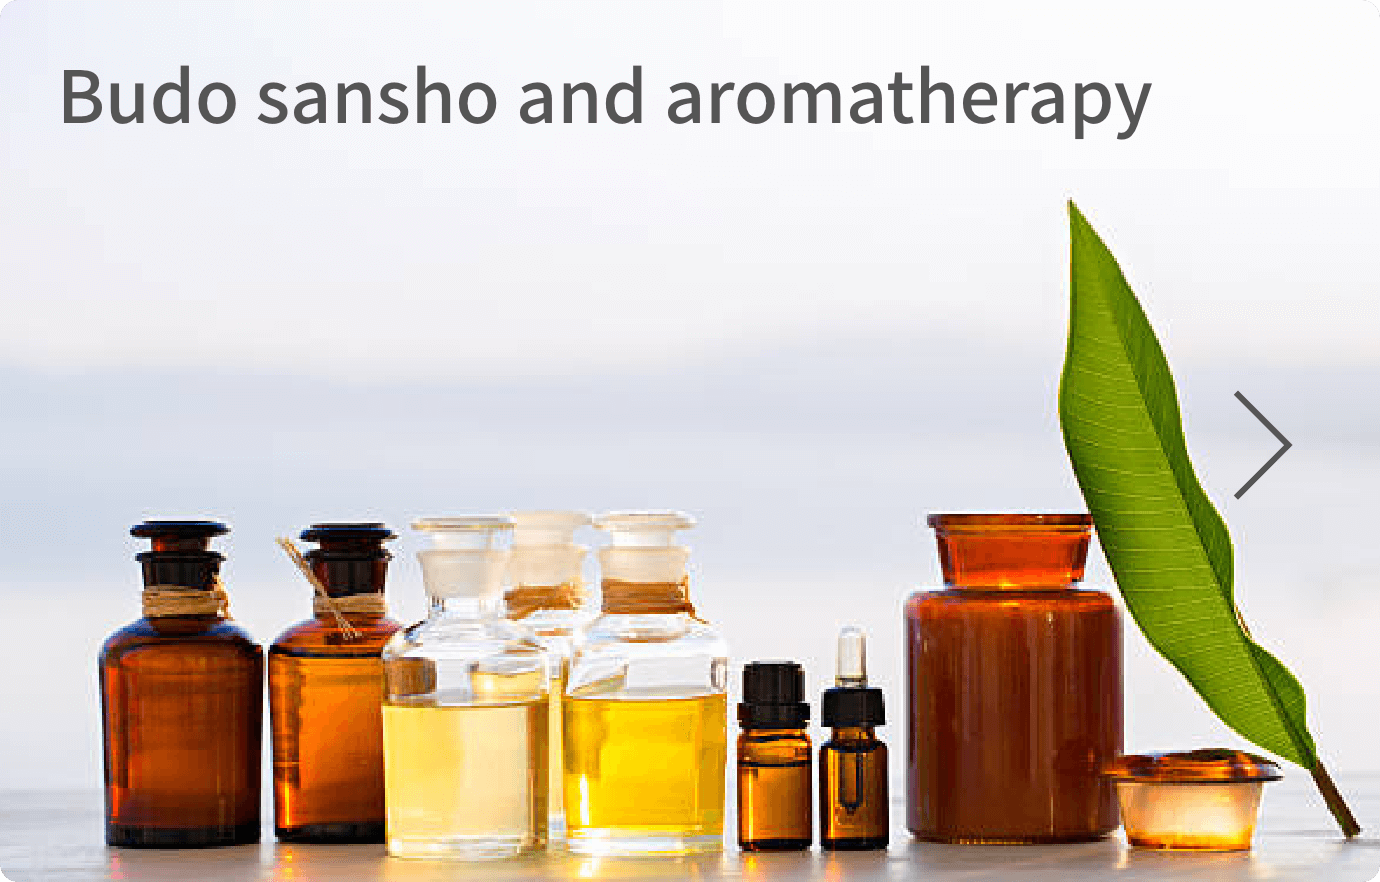 Budo sansho and aromatherapy